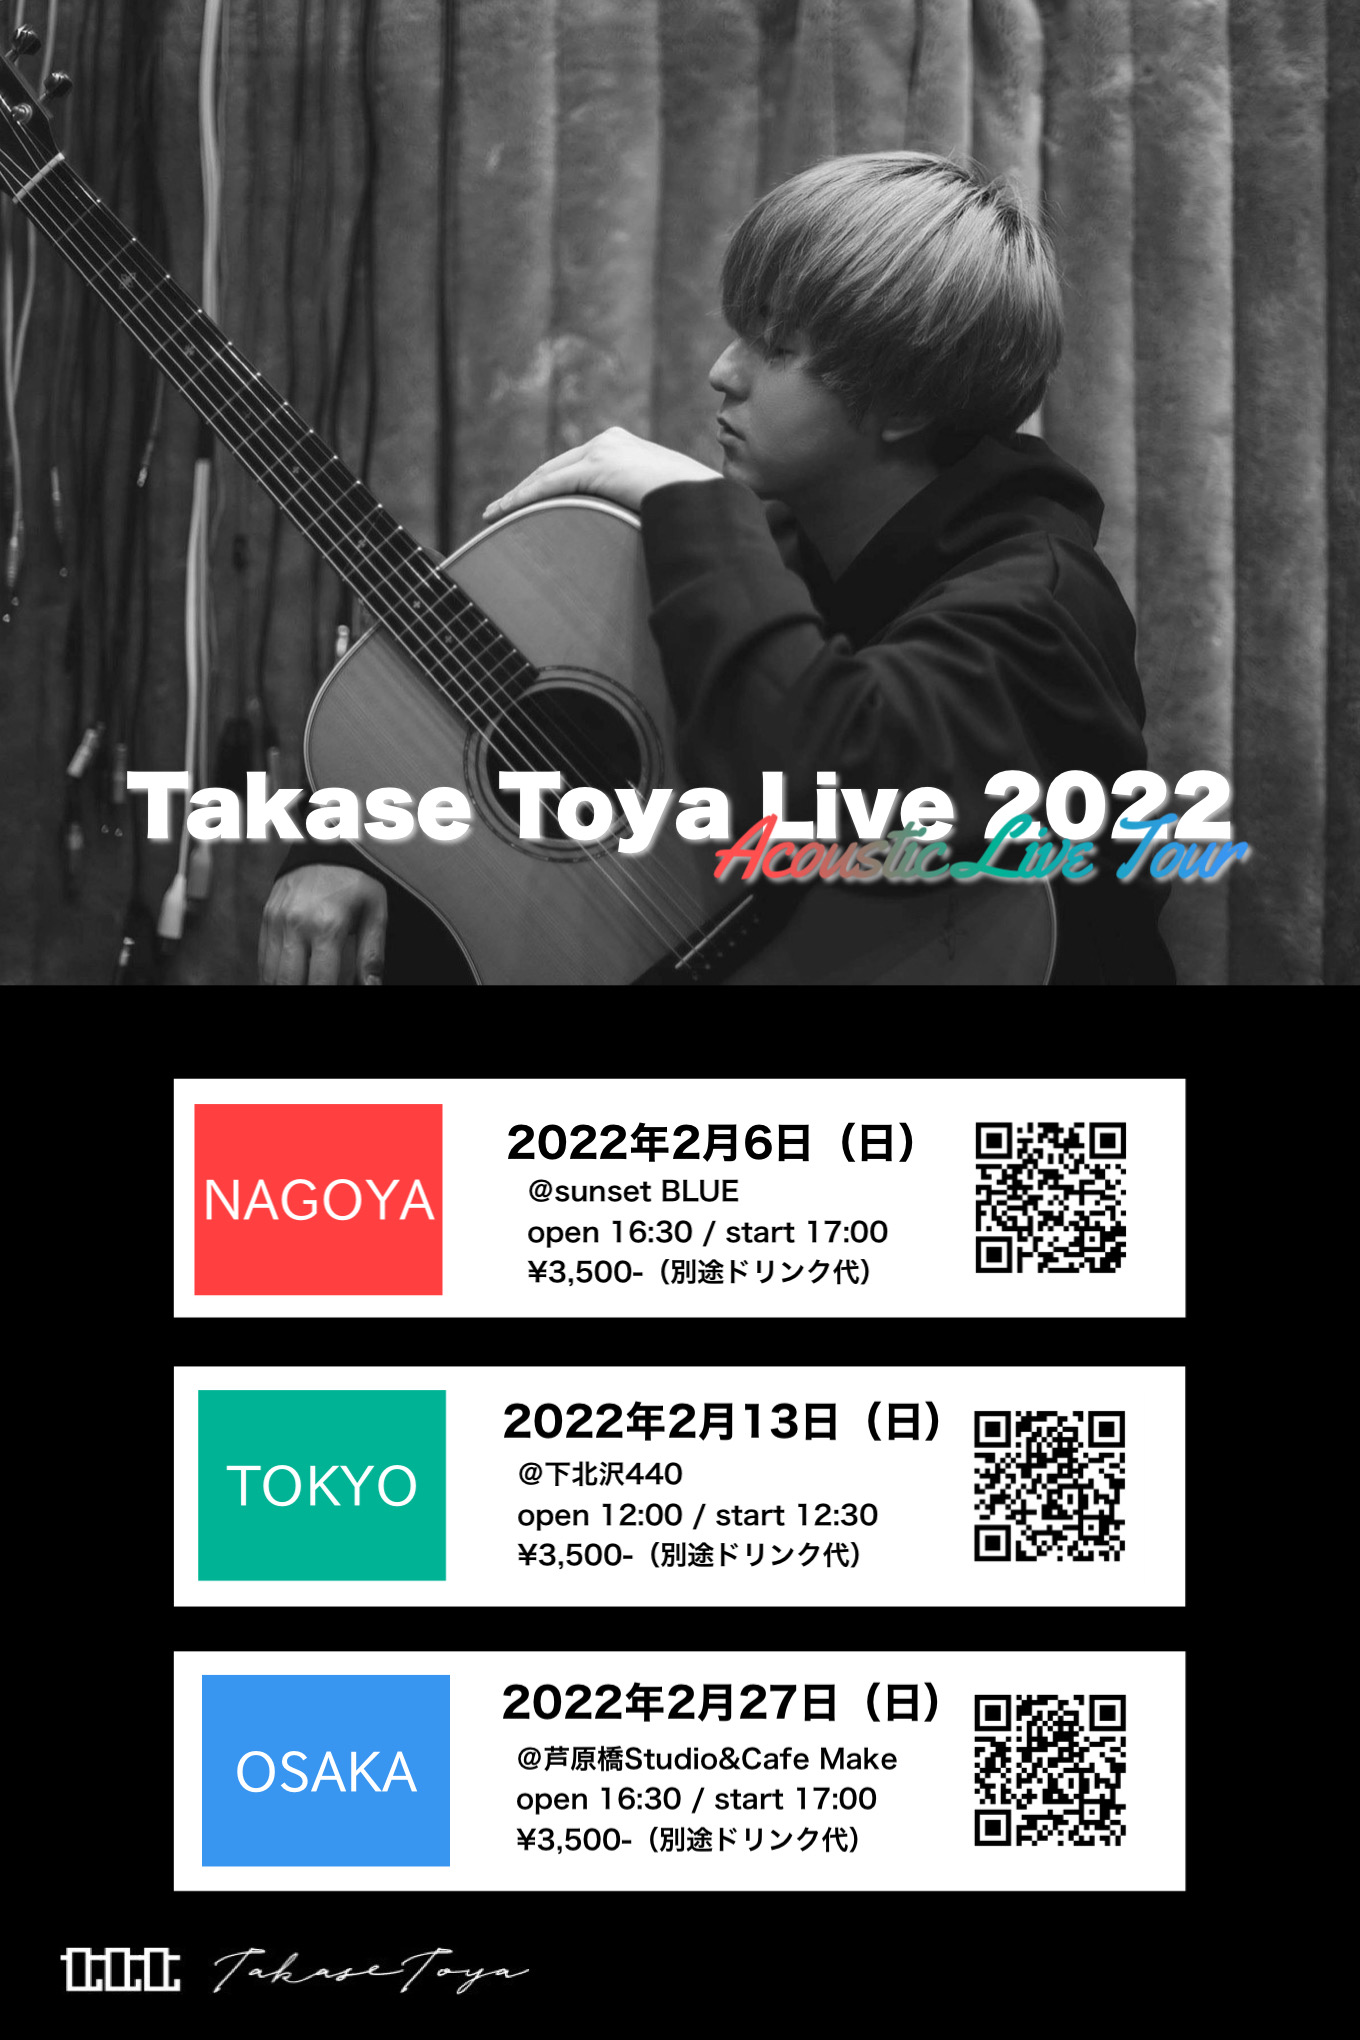 Takase Toya Live 2022【OSAKA】オフィシャル先行